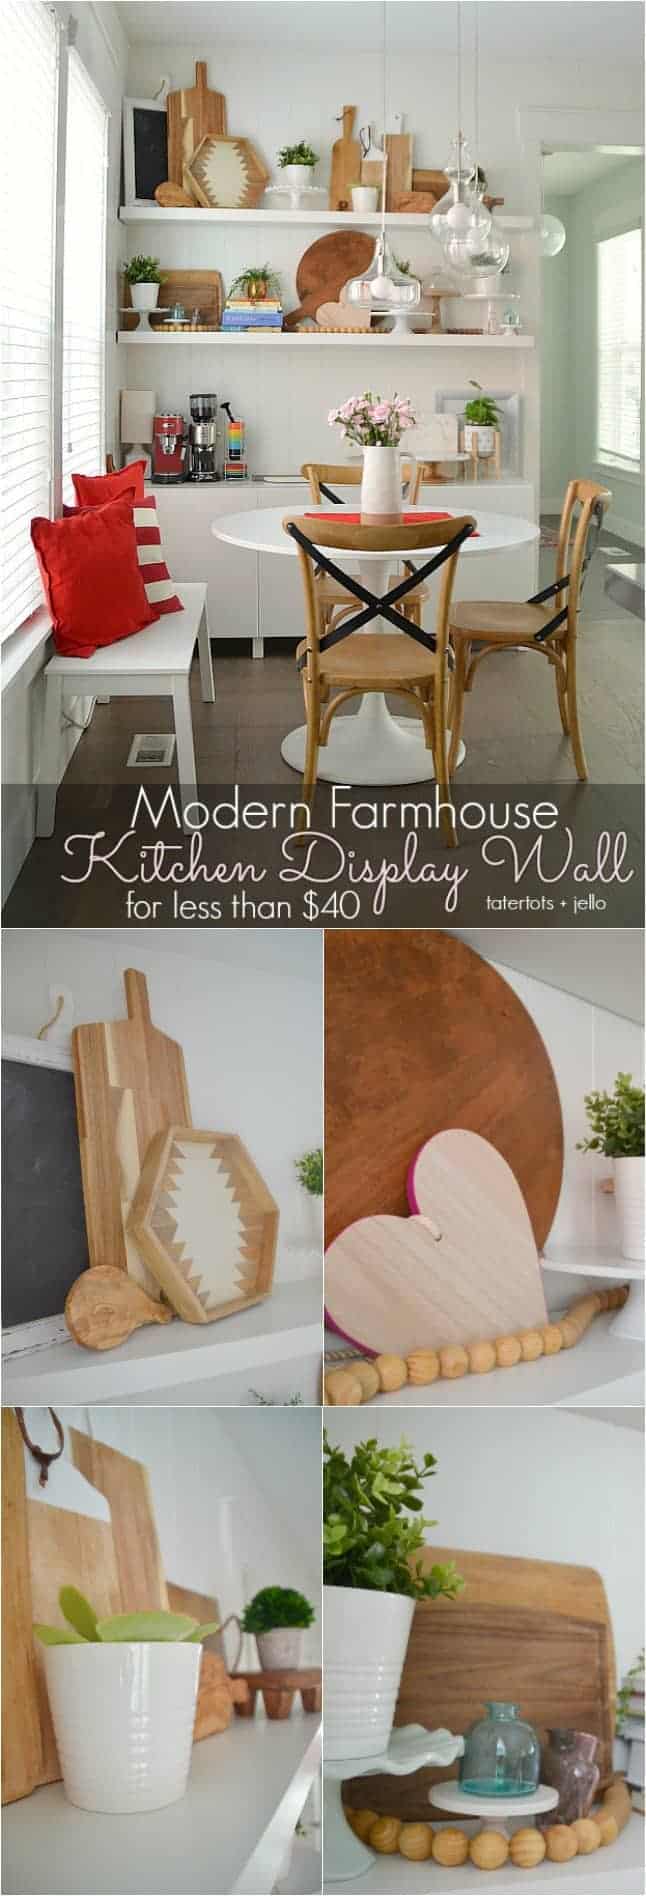 Modern Farmhouse Kitchen Display by Tatertots and Jello | Dreamy Modern Farmhouse Kitchens